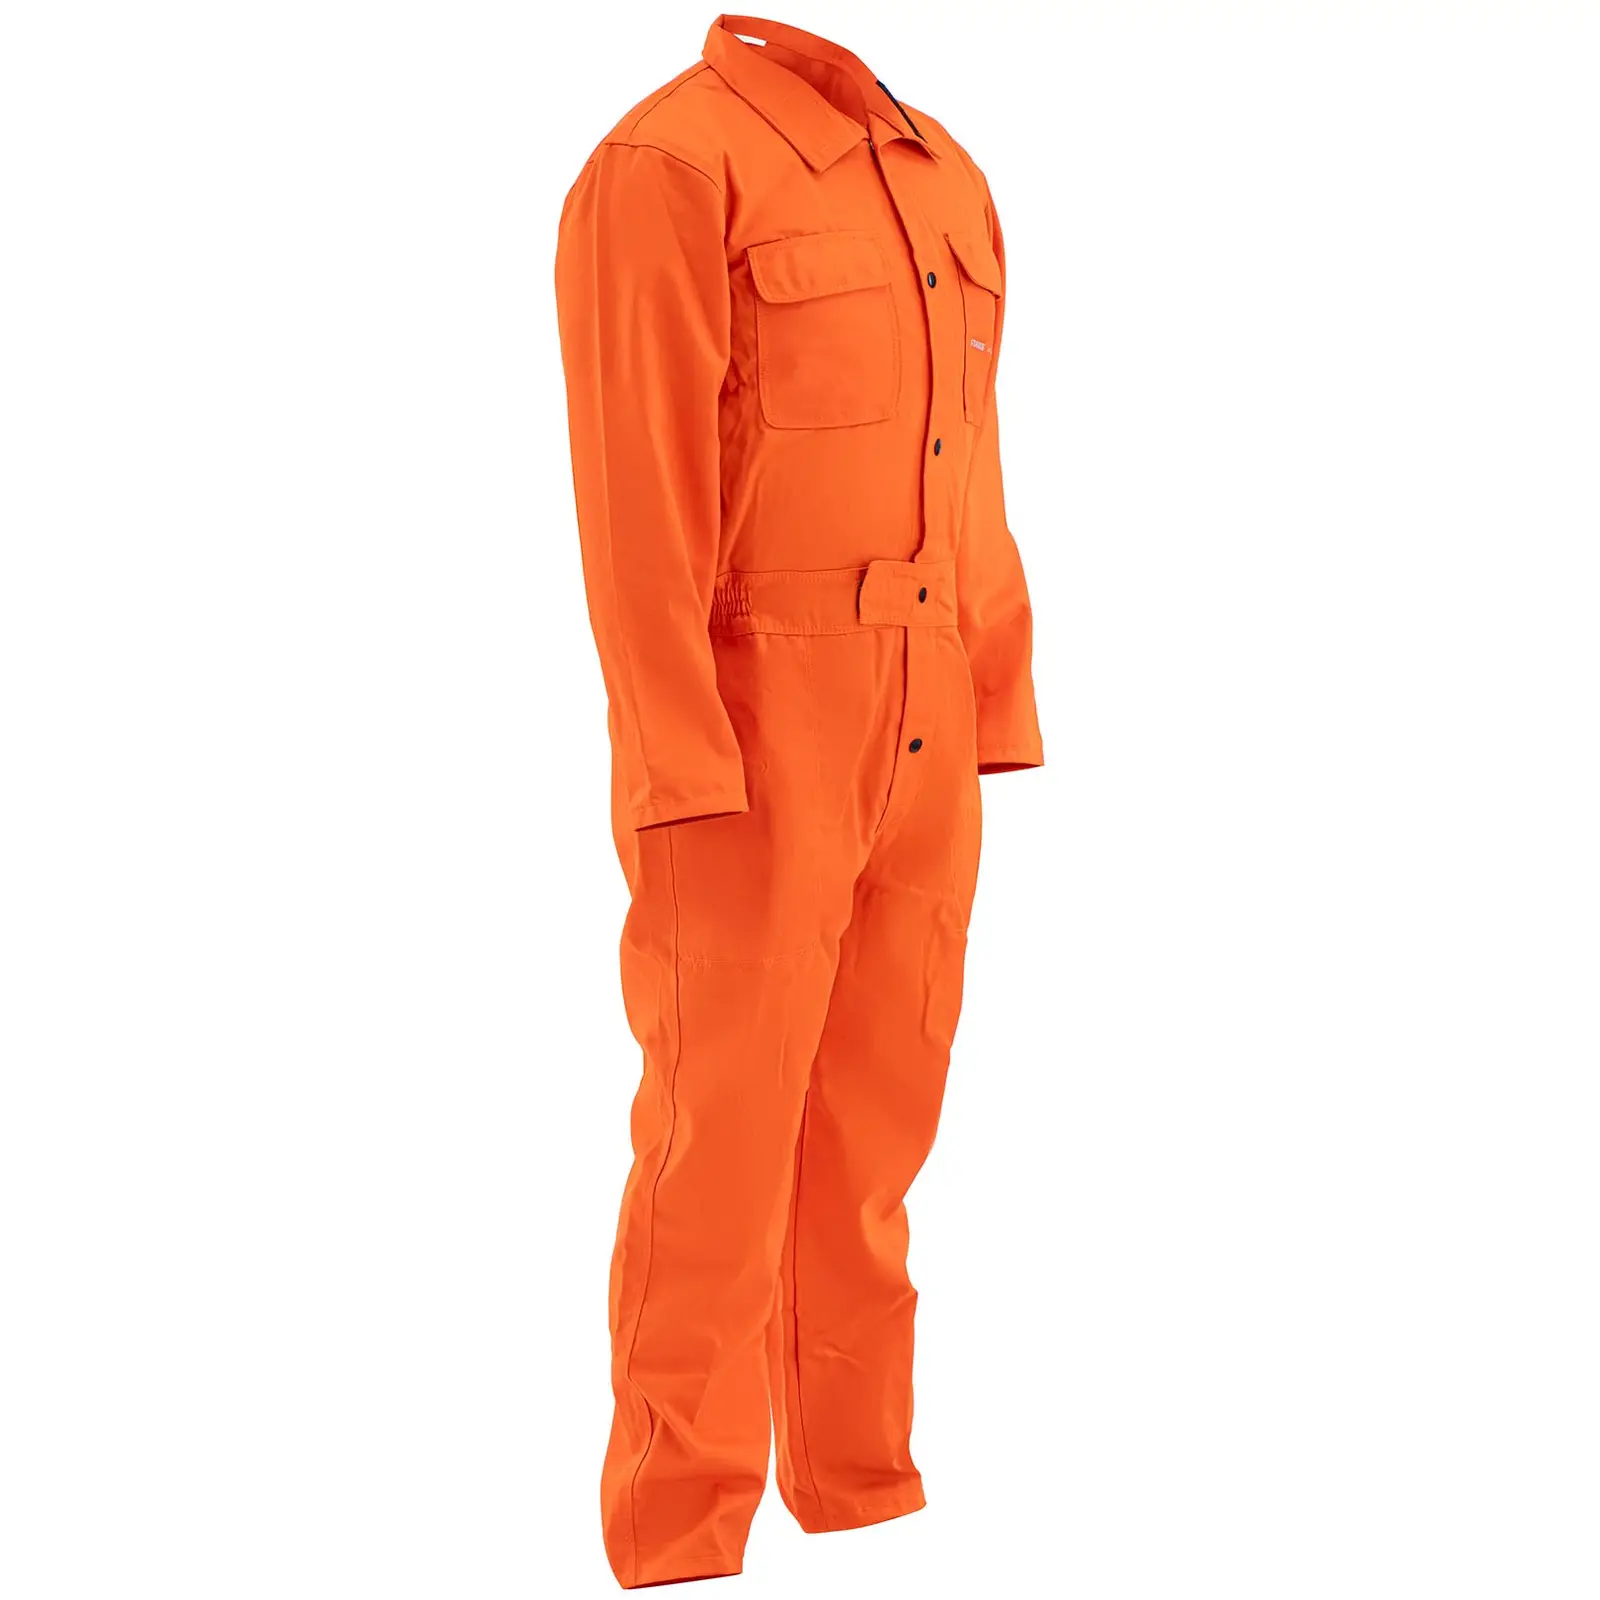 Welding Overall - Size L - Orange